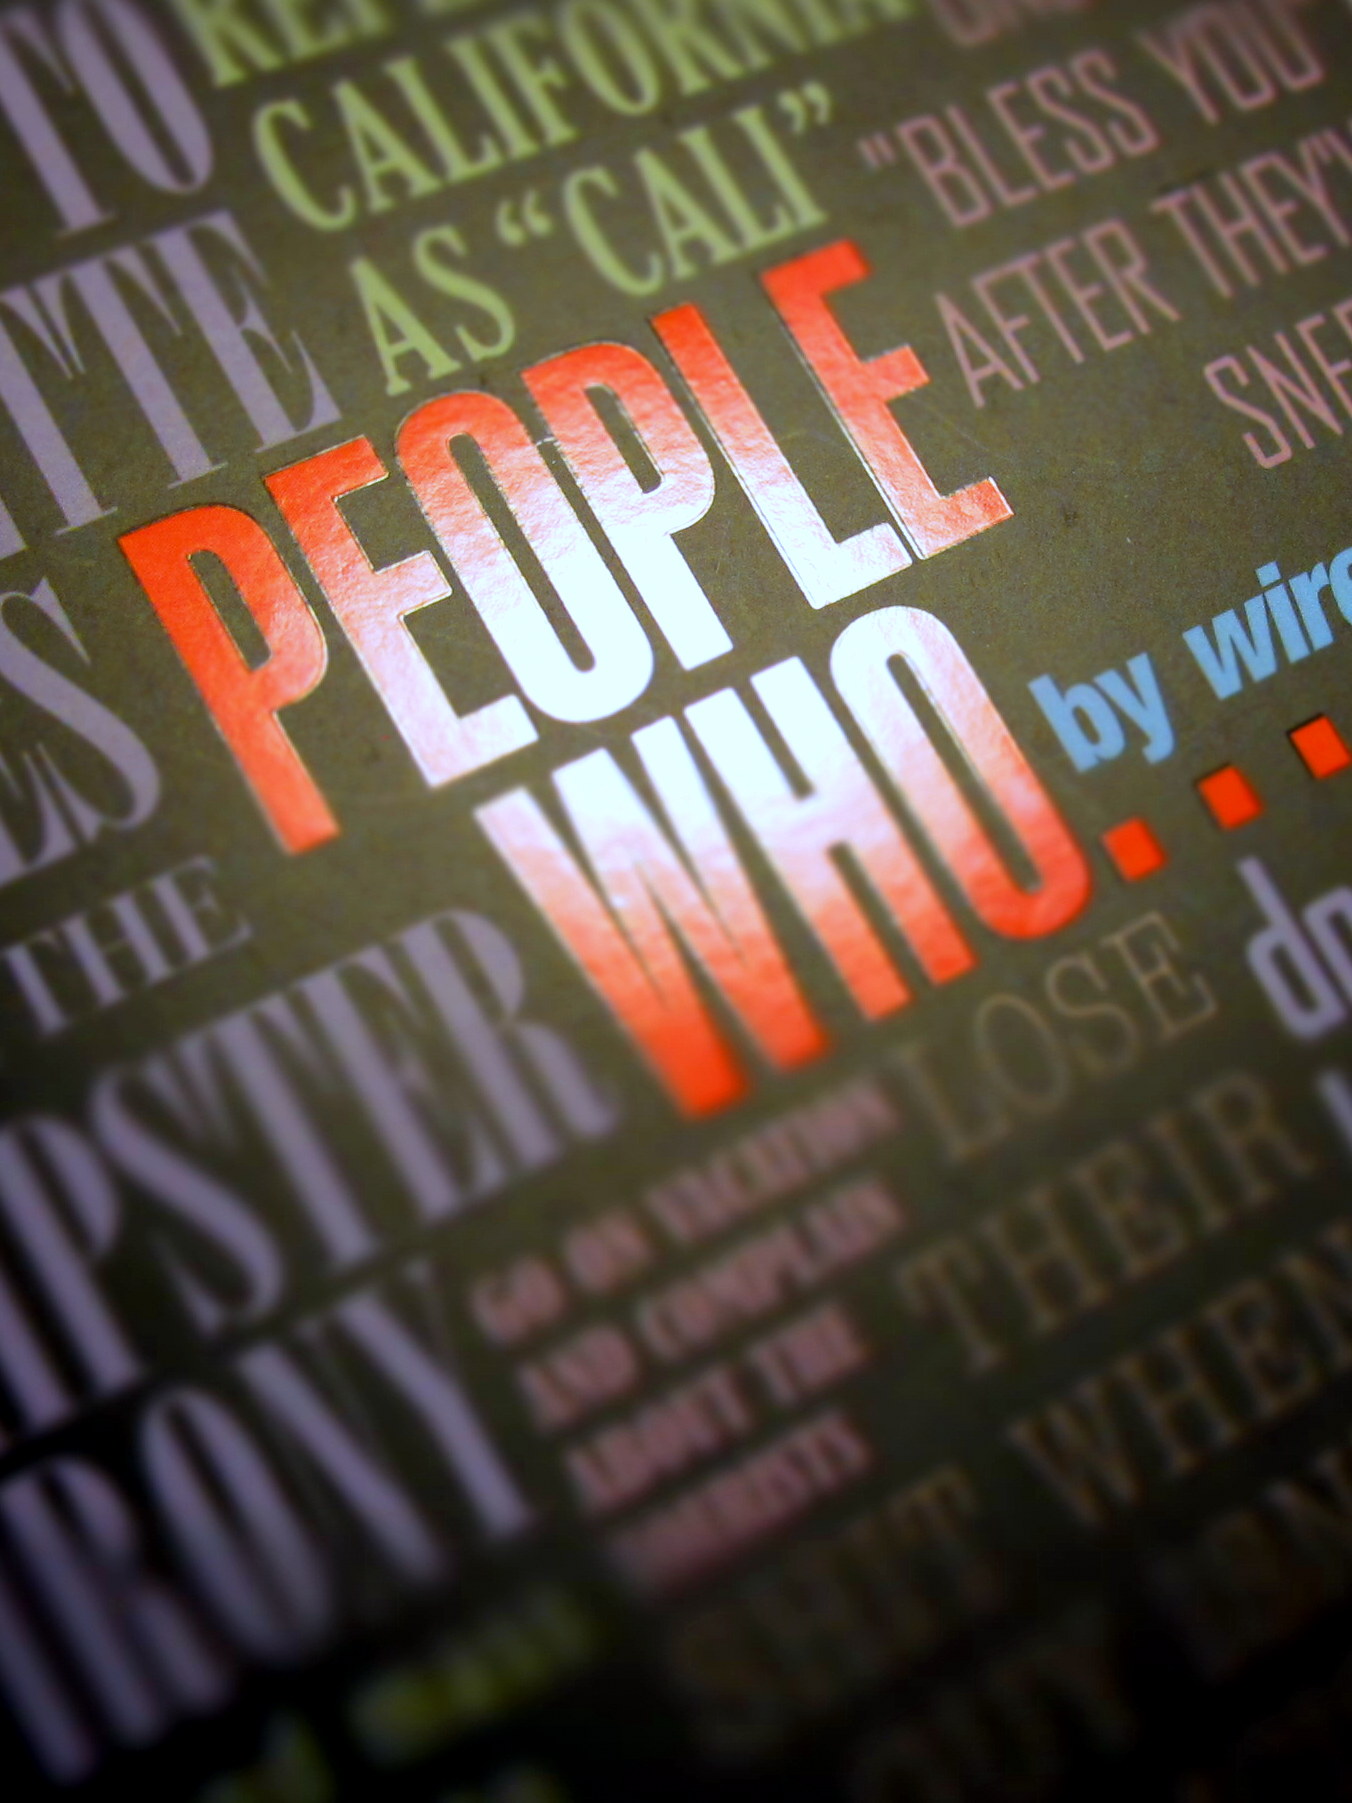 PEOPLE WHO...